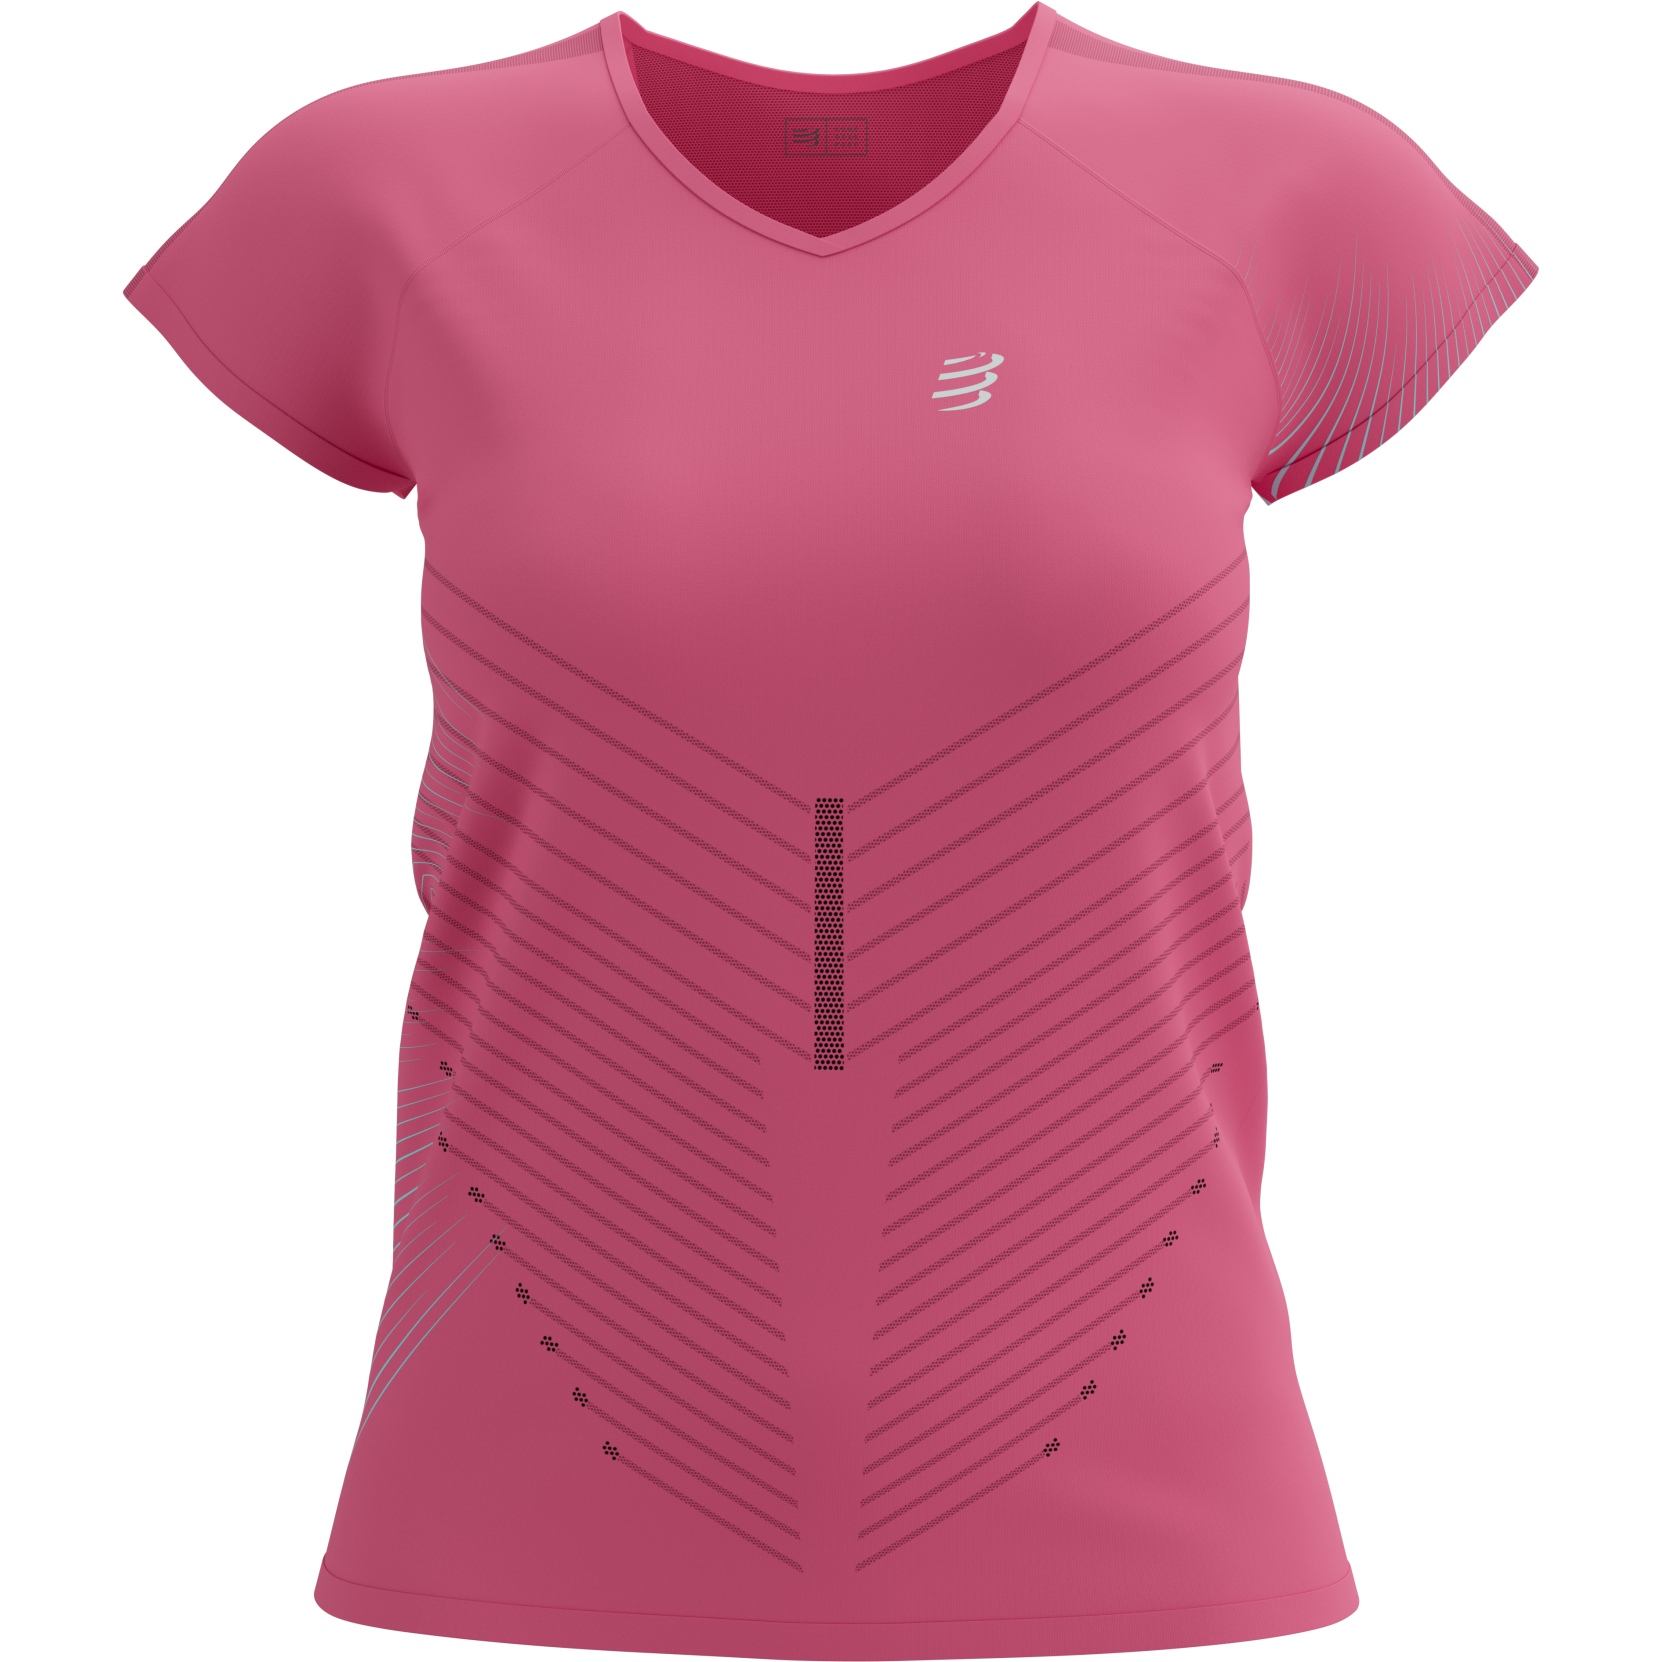 Produktbild von Compressport Performance T-Shirt Damen - hot pink/aqua